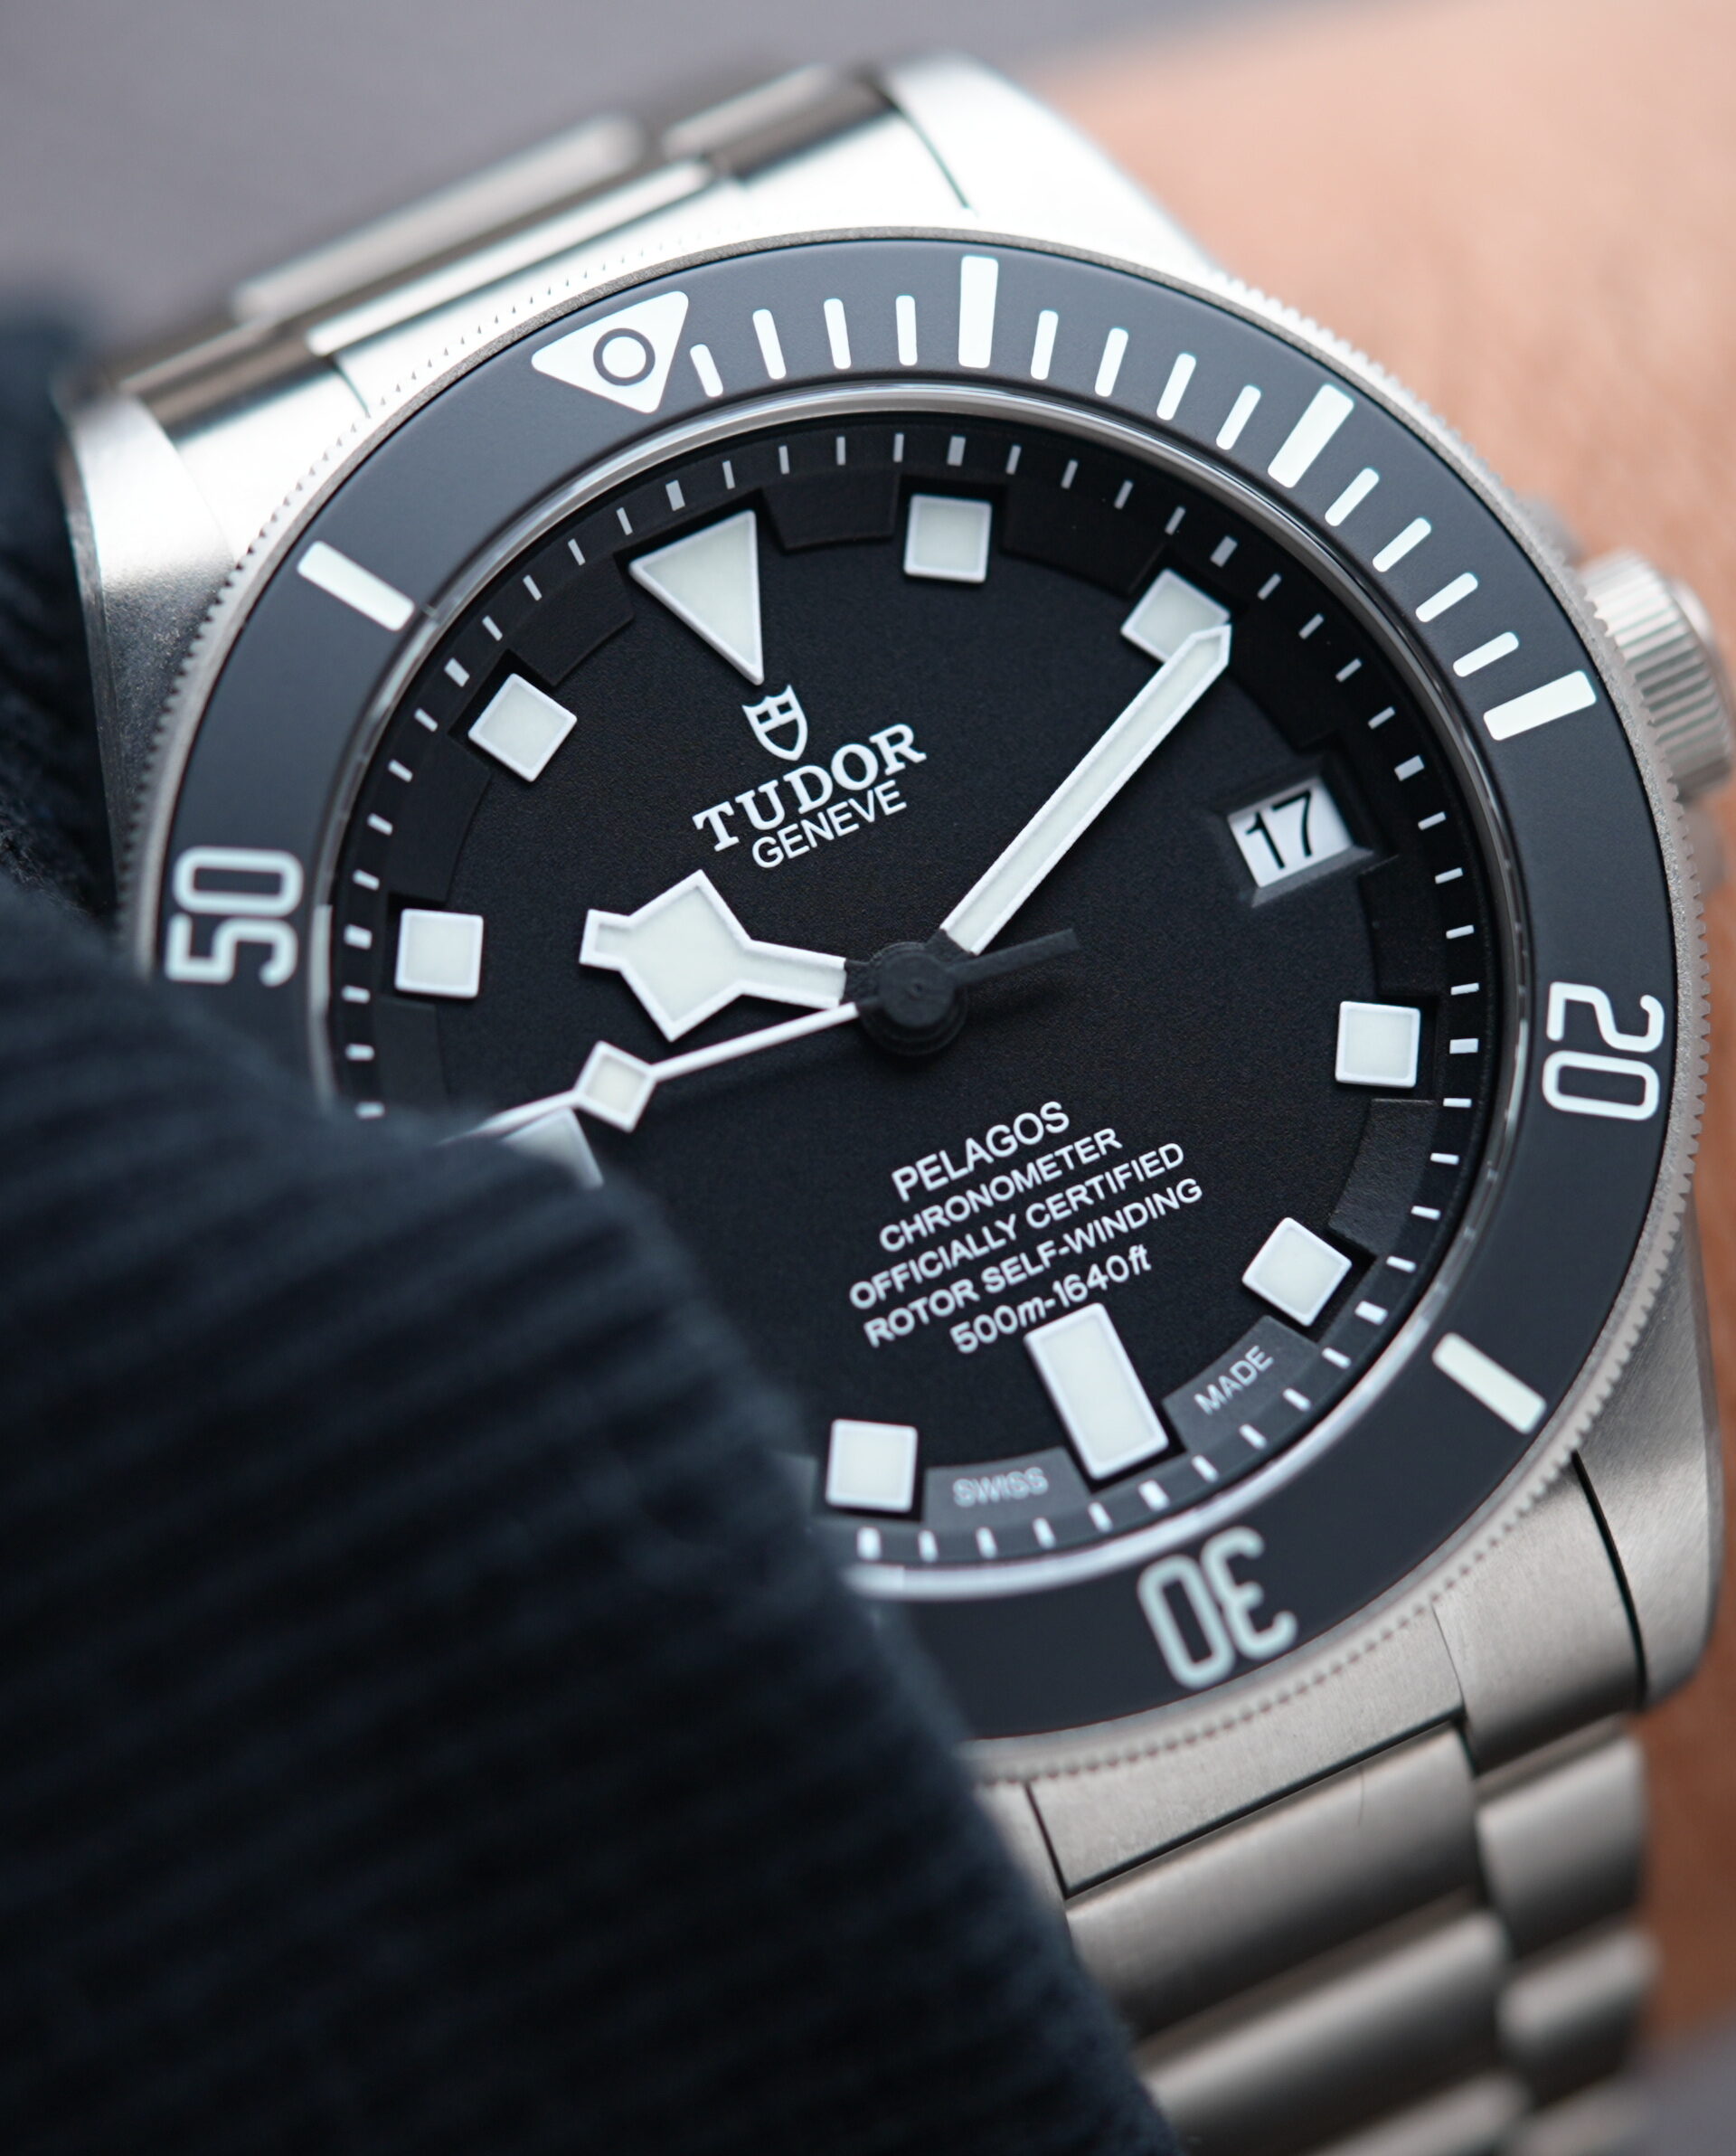 Tudor Pelagos 25600TN watch featured on the wrist.